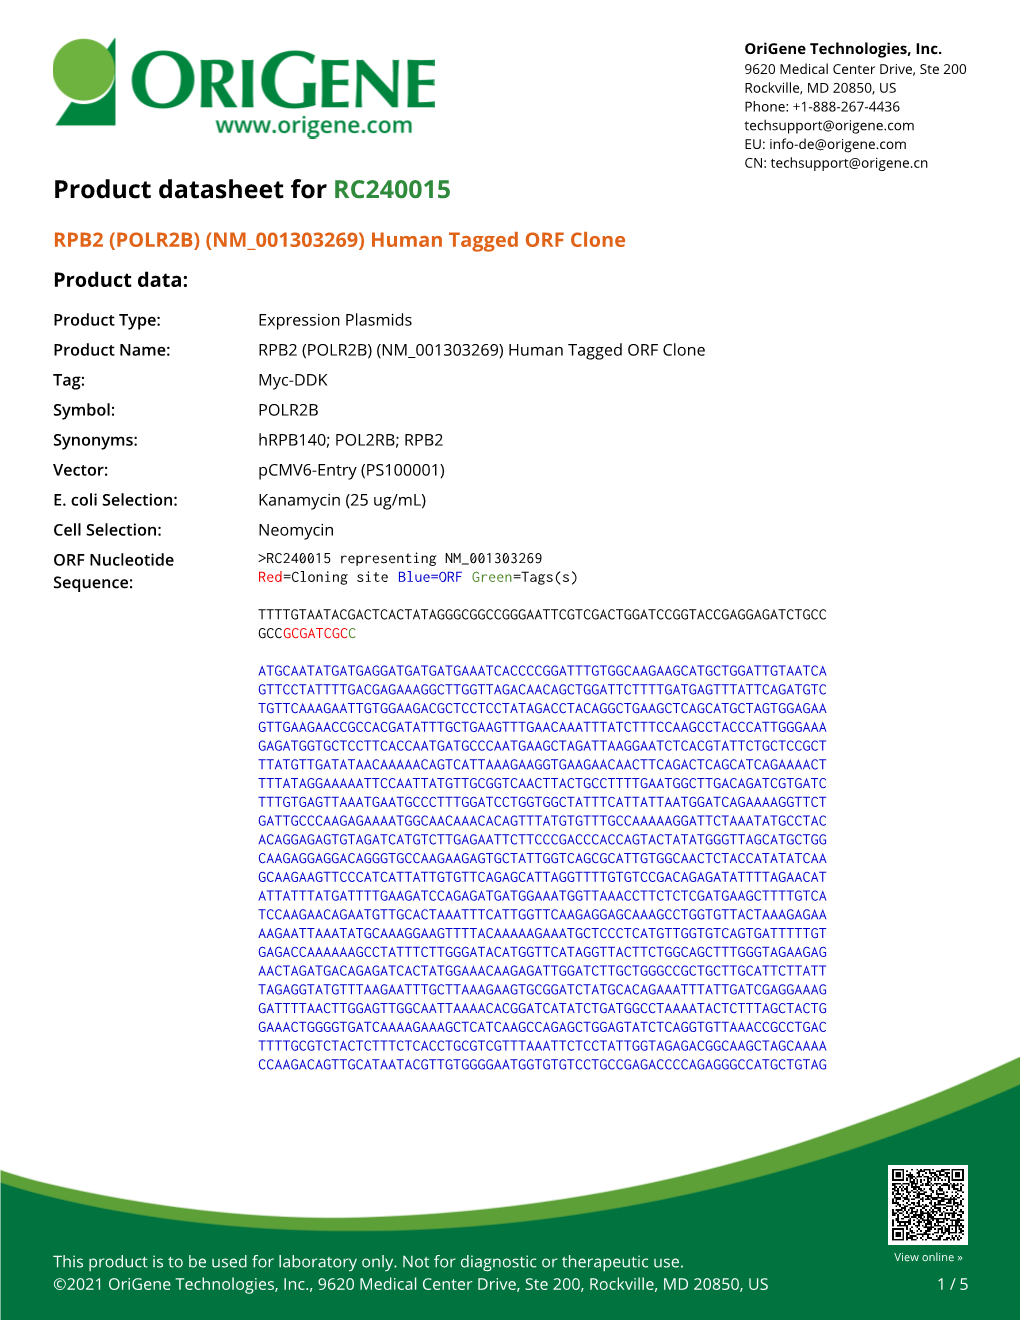 RPB2 (POLR2B) (NM 001303269) Human Tagged ORF Clone Product Data